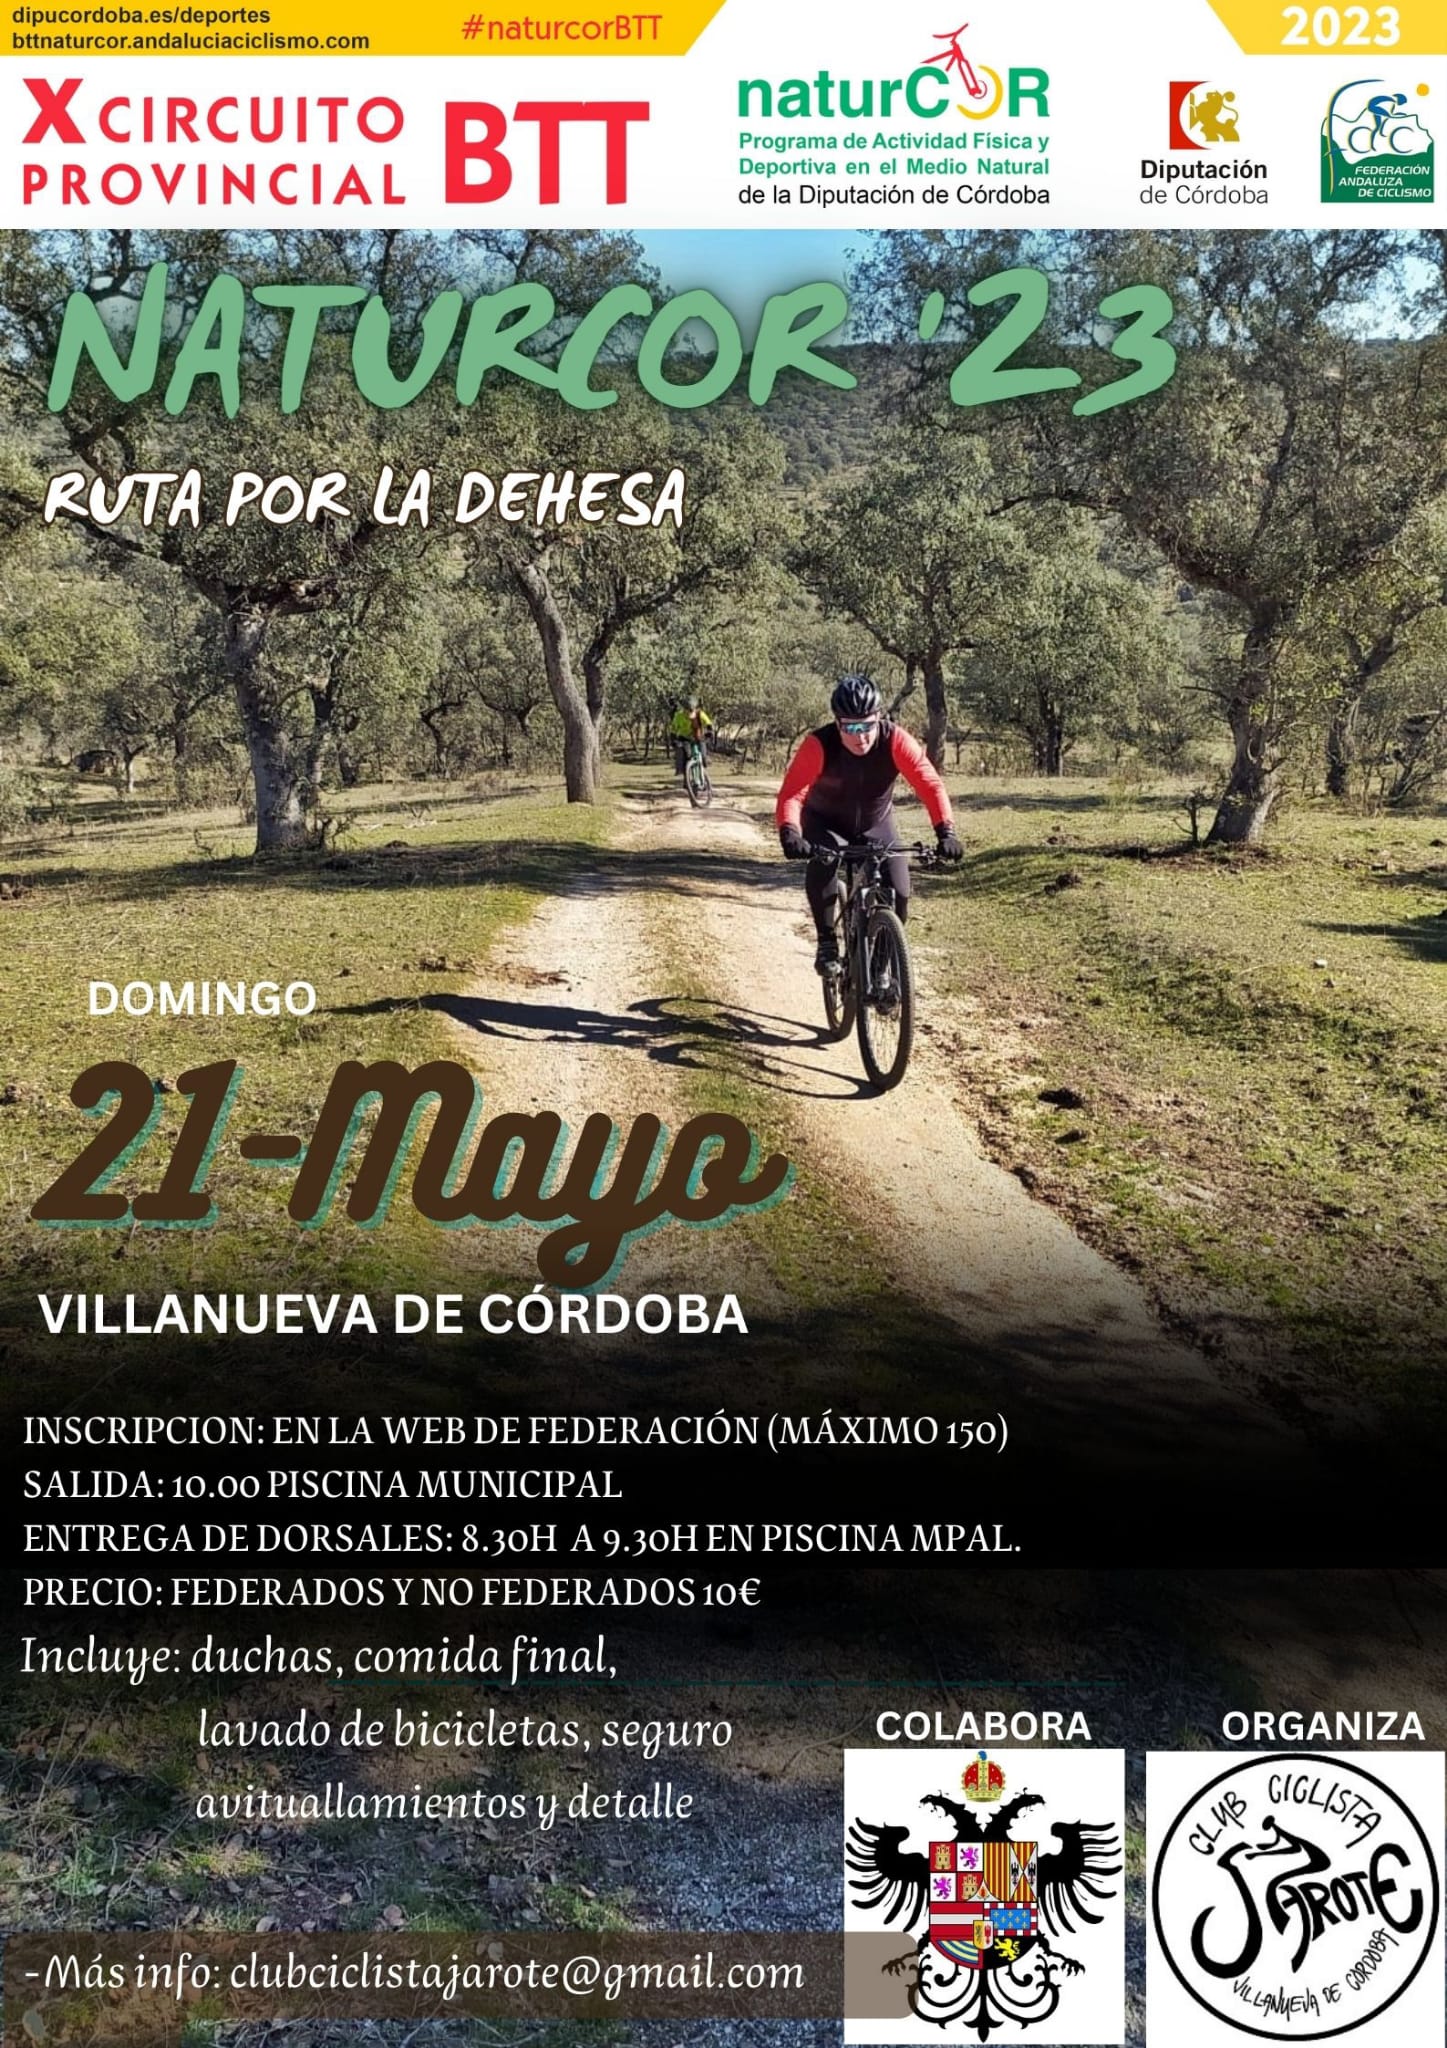 El NaturCor pedaleará por la Dehesa de Villanueva de Córdoba